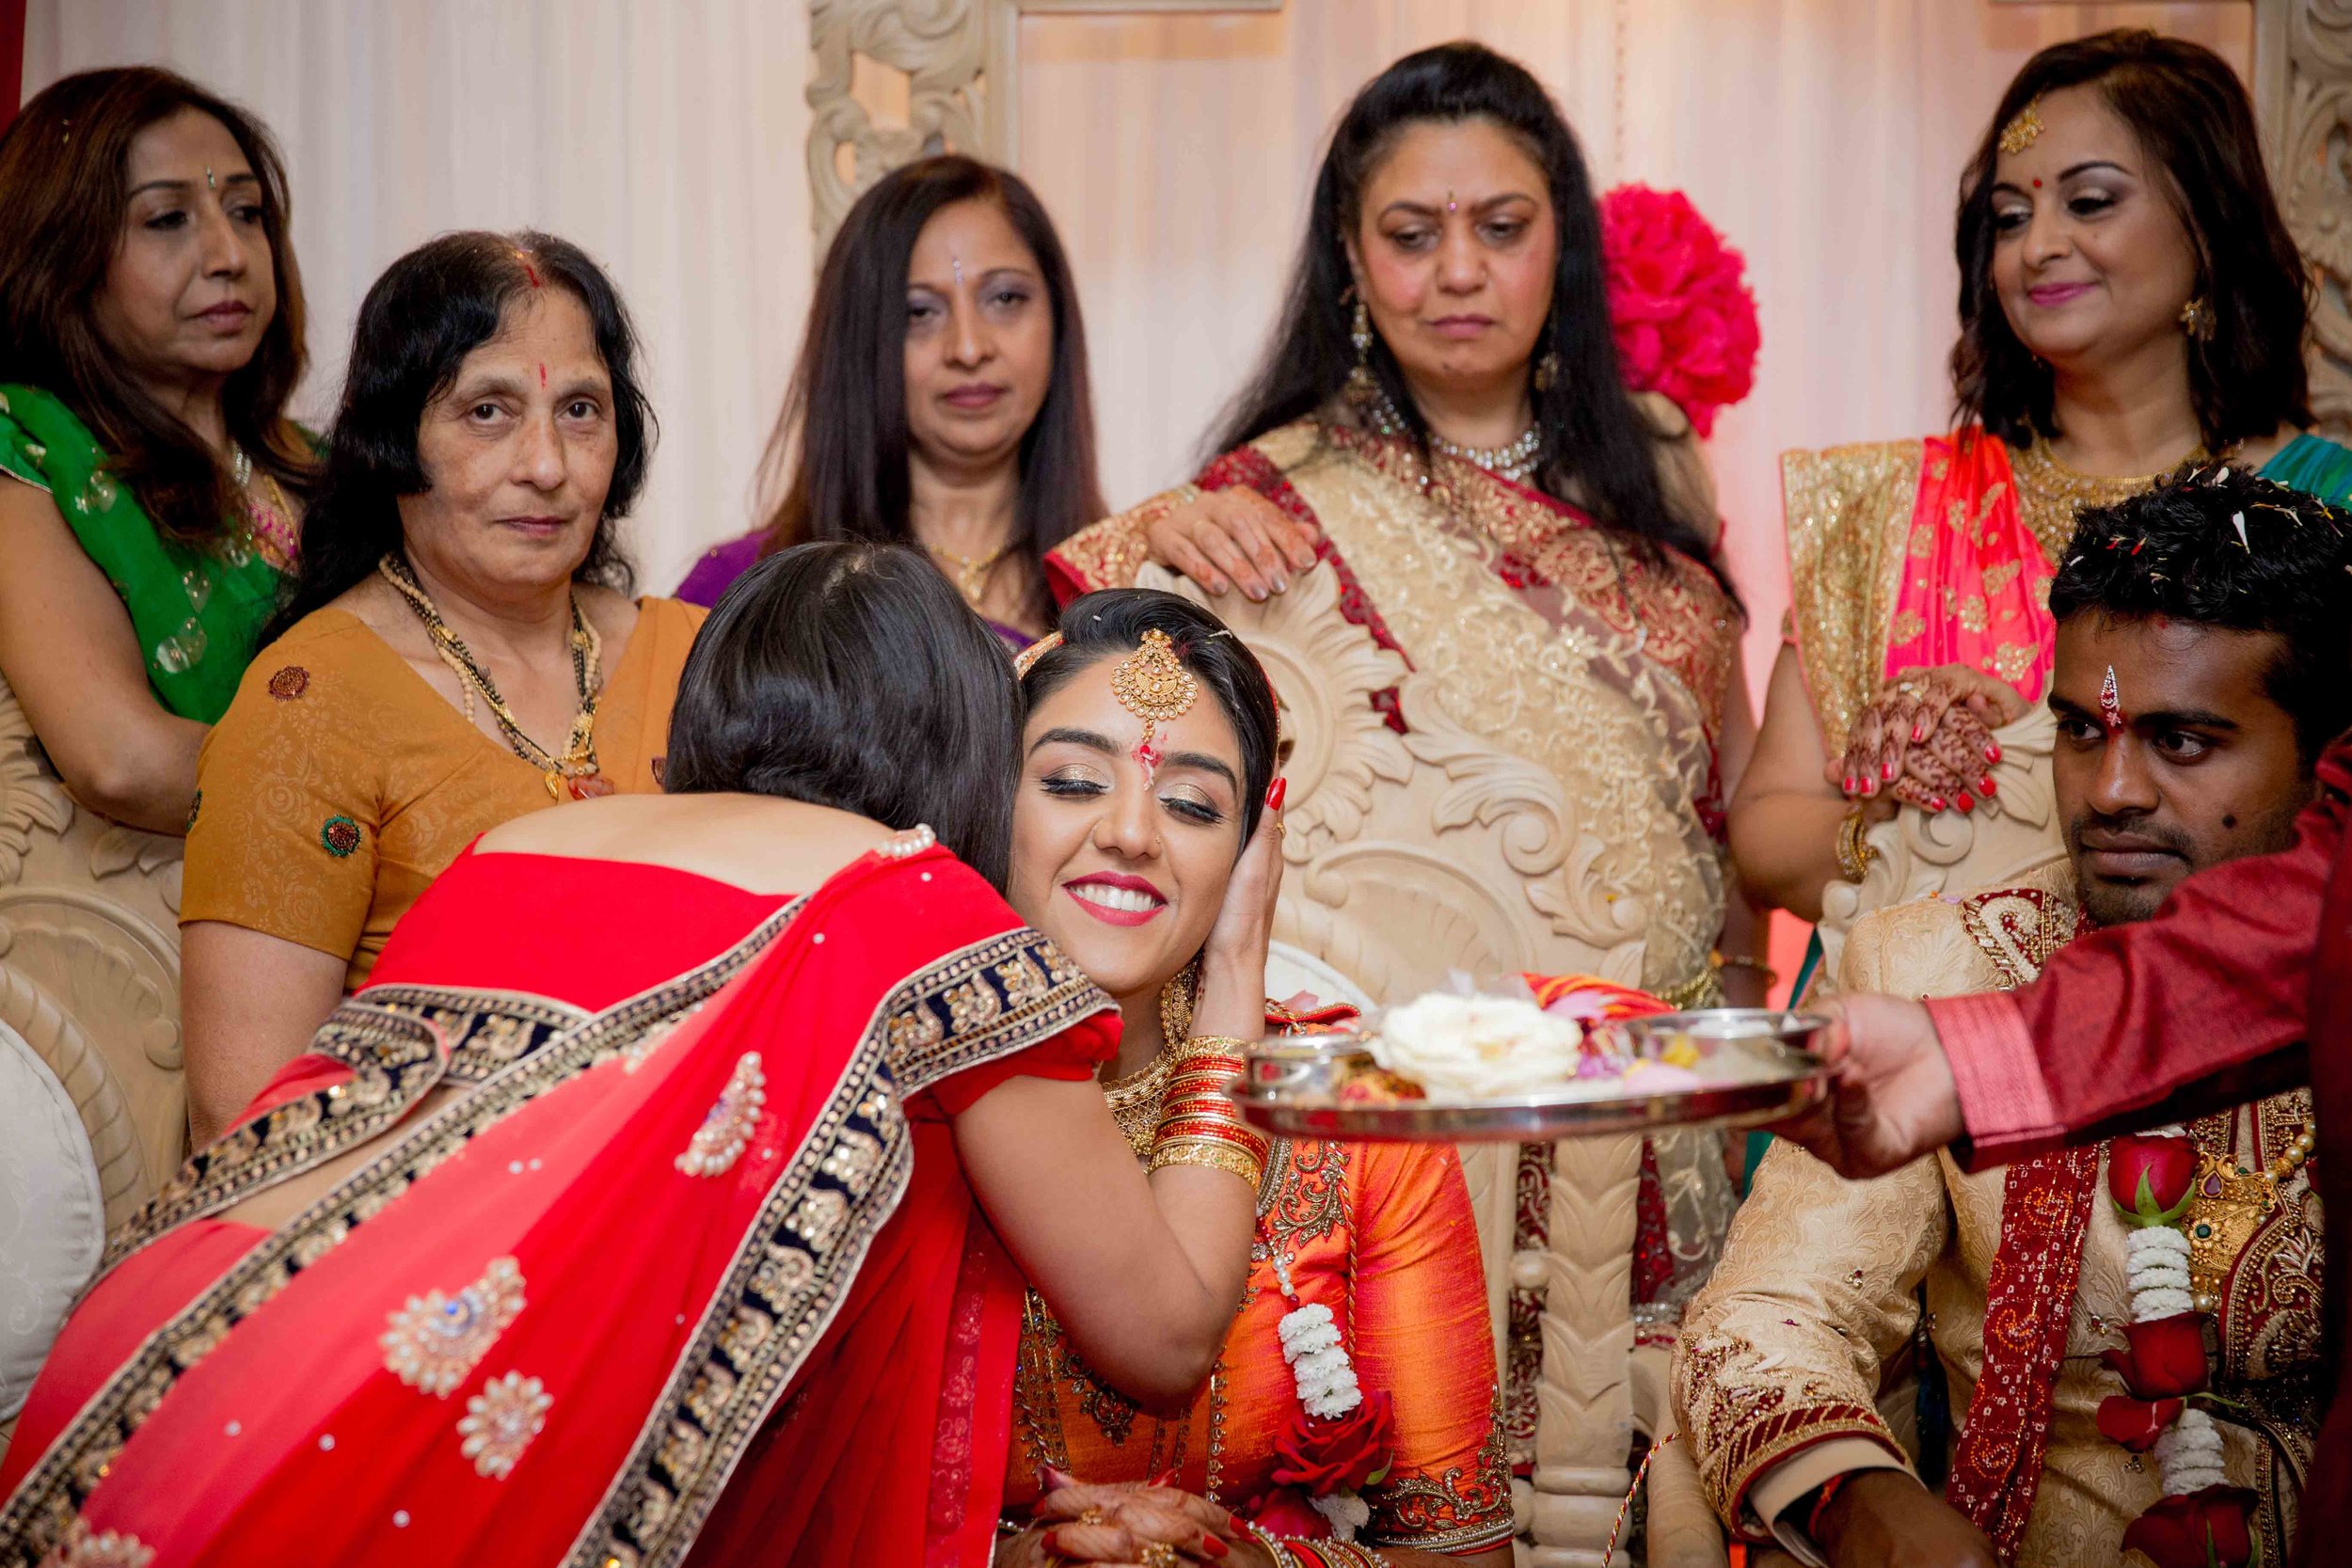 premier-banquetting-london-Hindu-asian-wedding-photographer-natalia-smith-photography-31.jpg